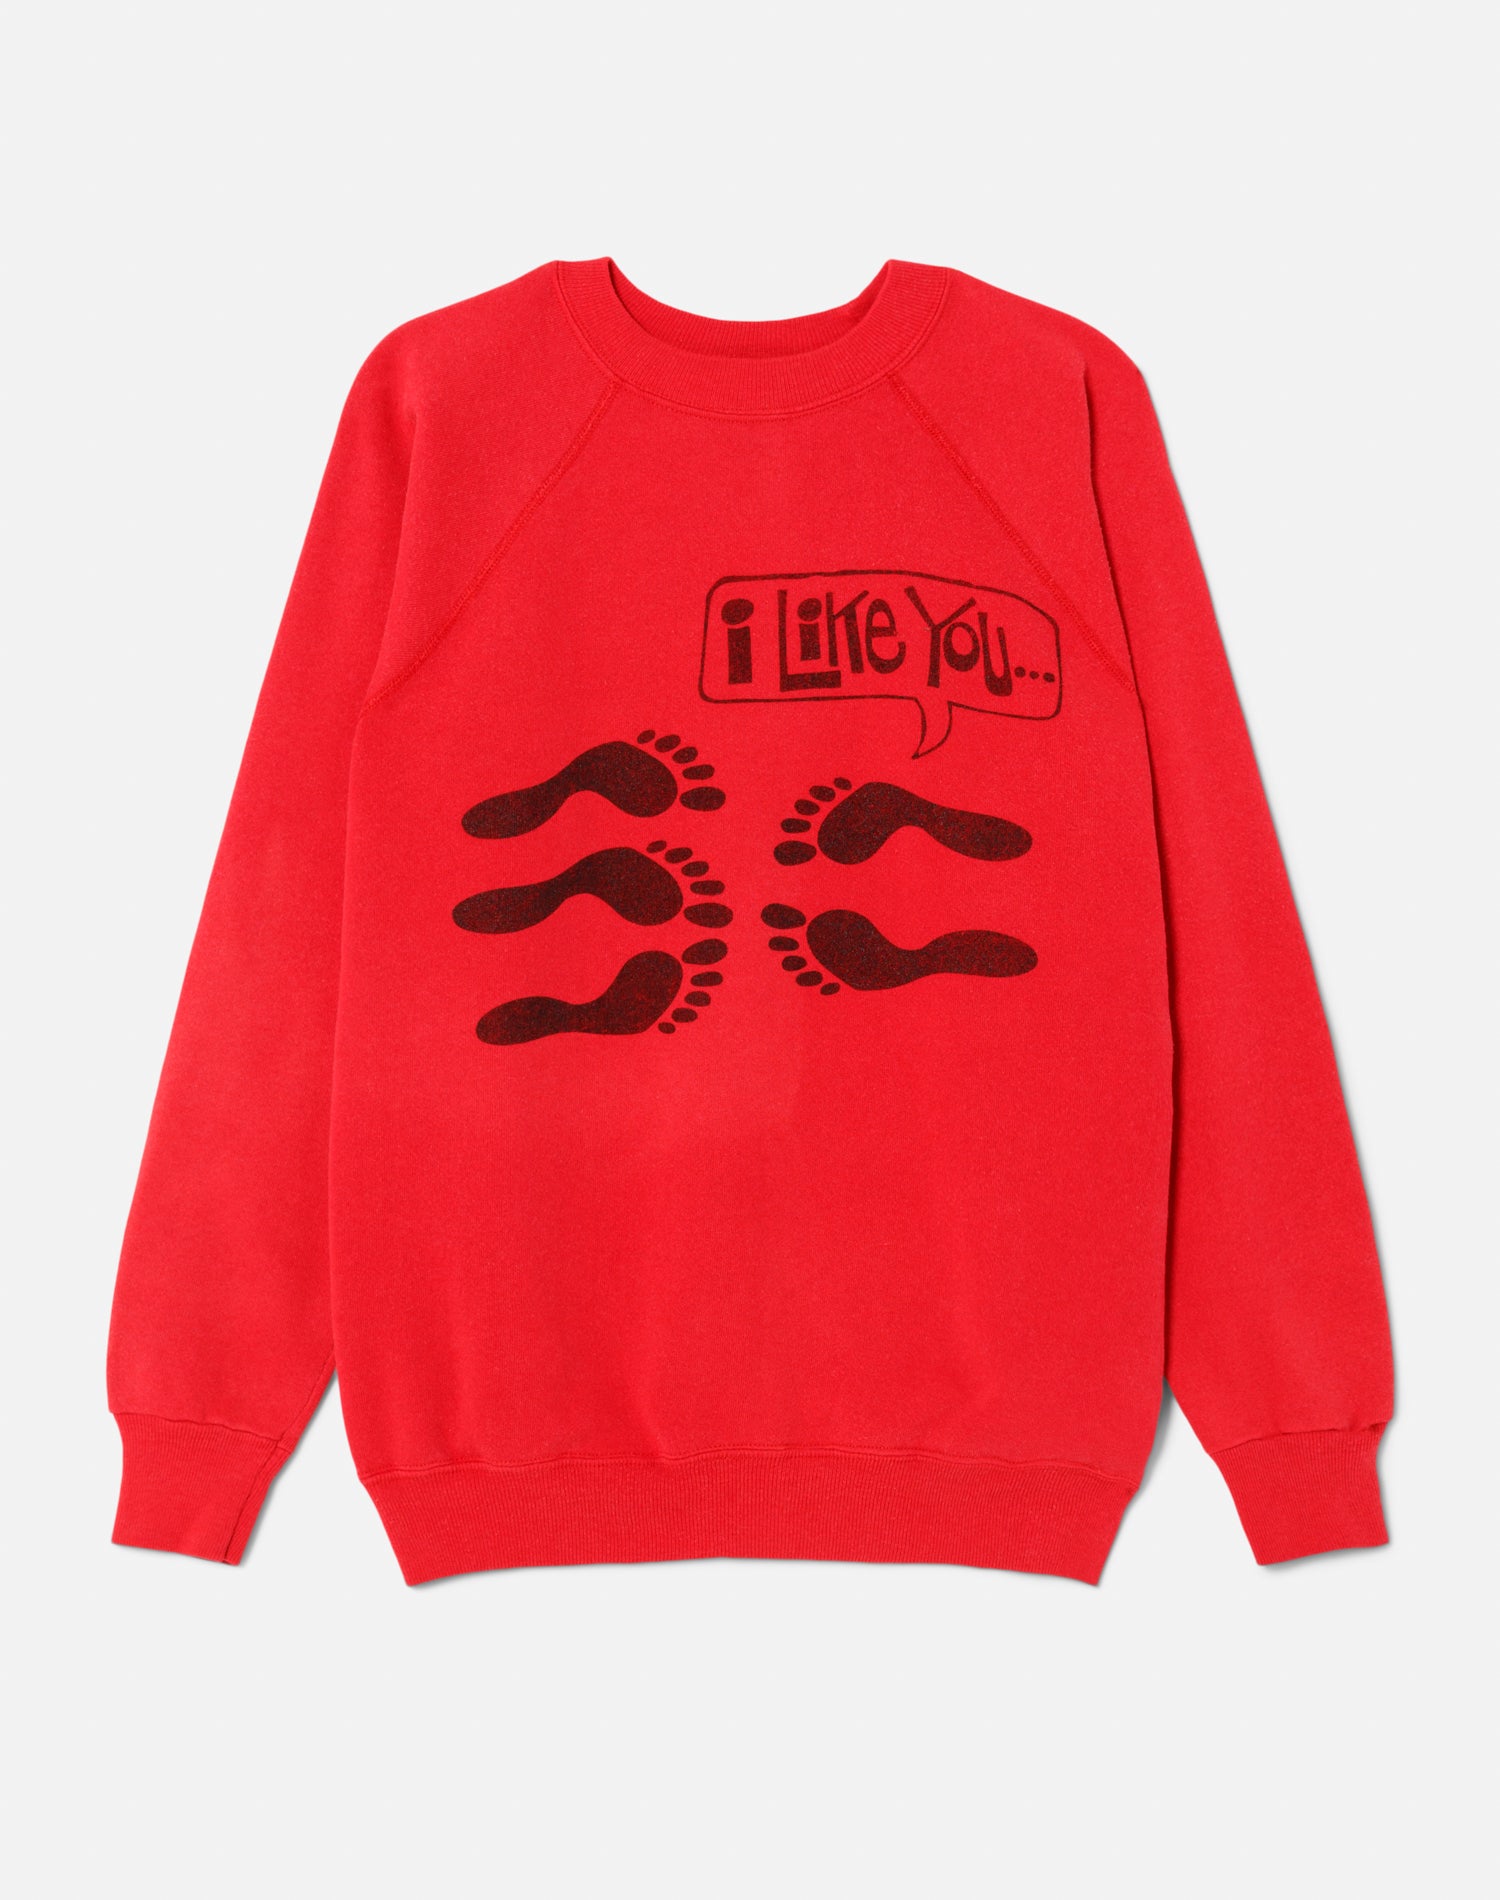 Upcycled "I Like You" Sweatshirt - Red